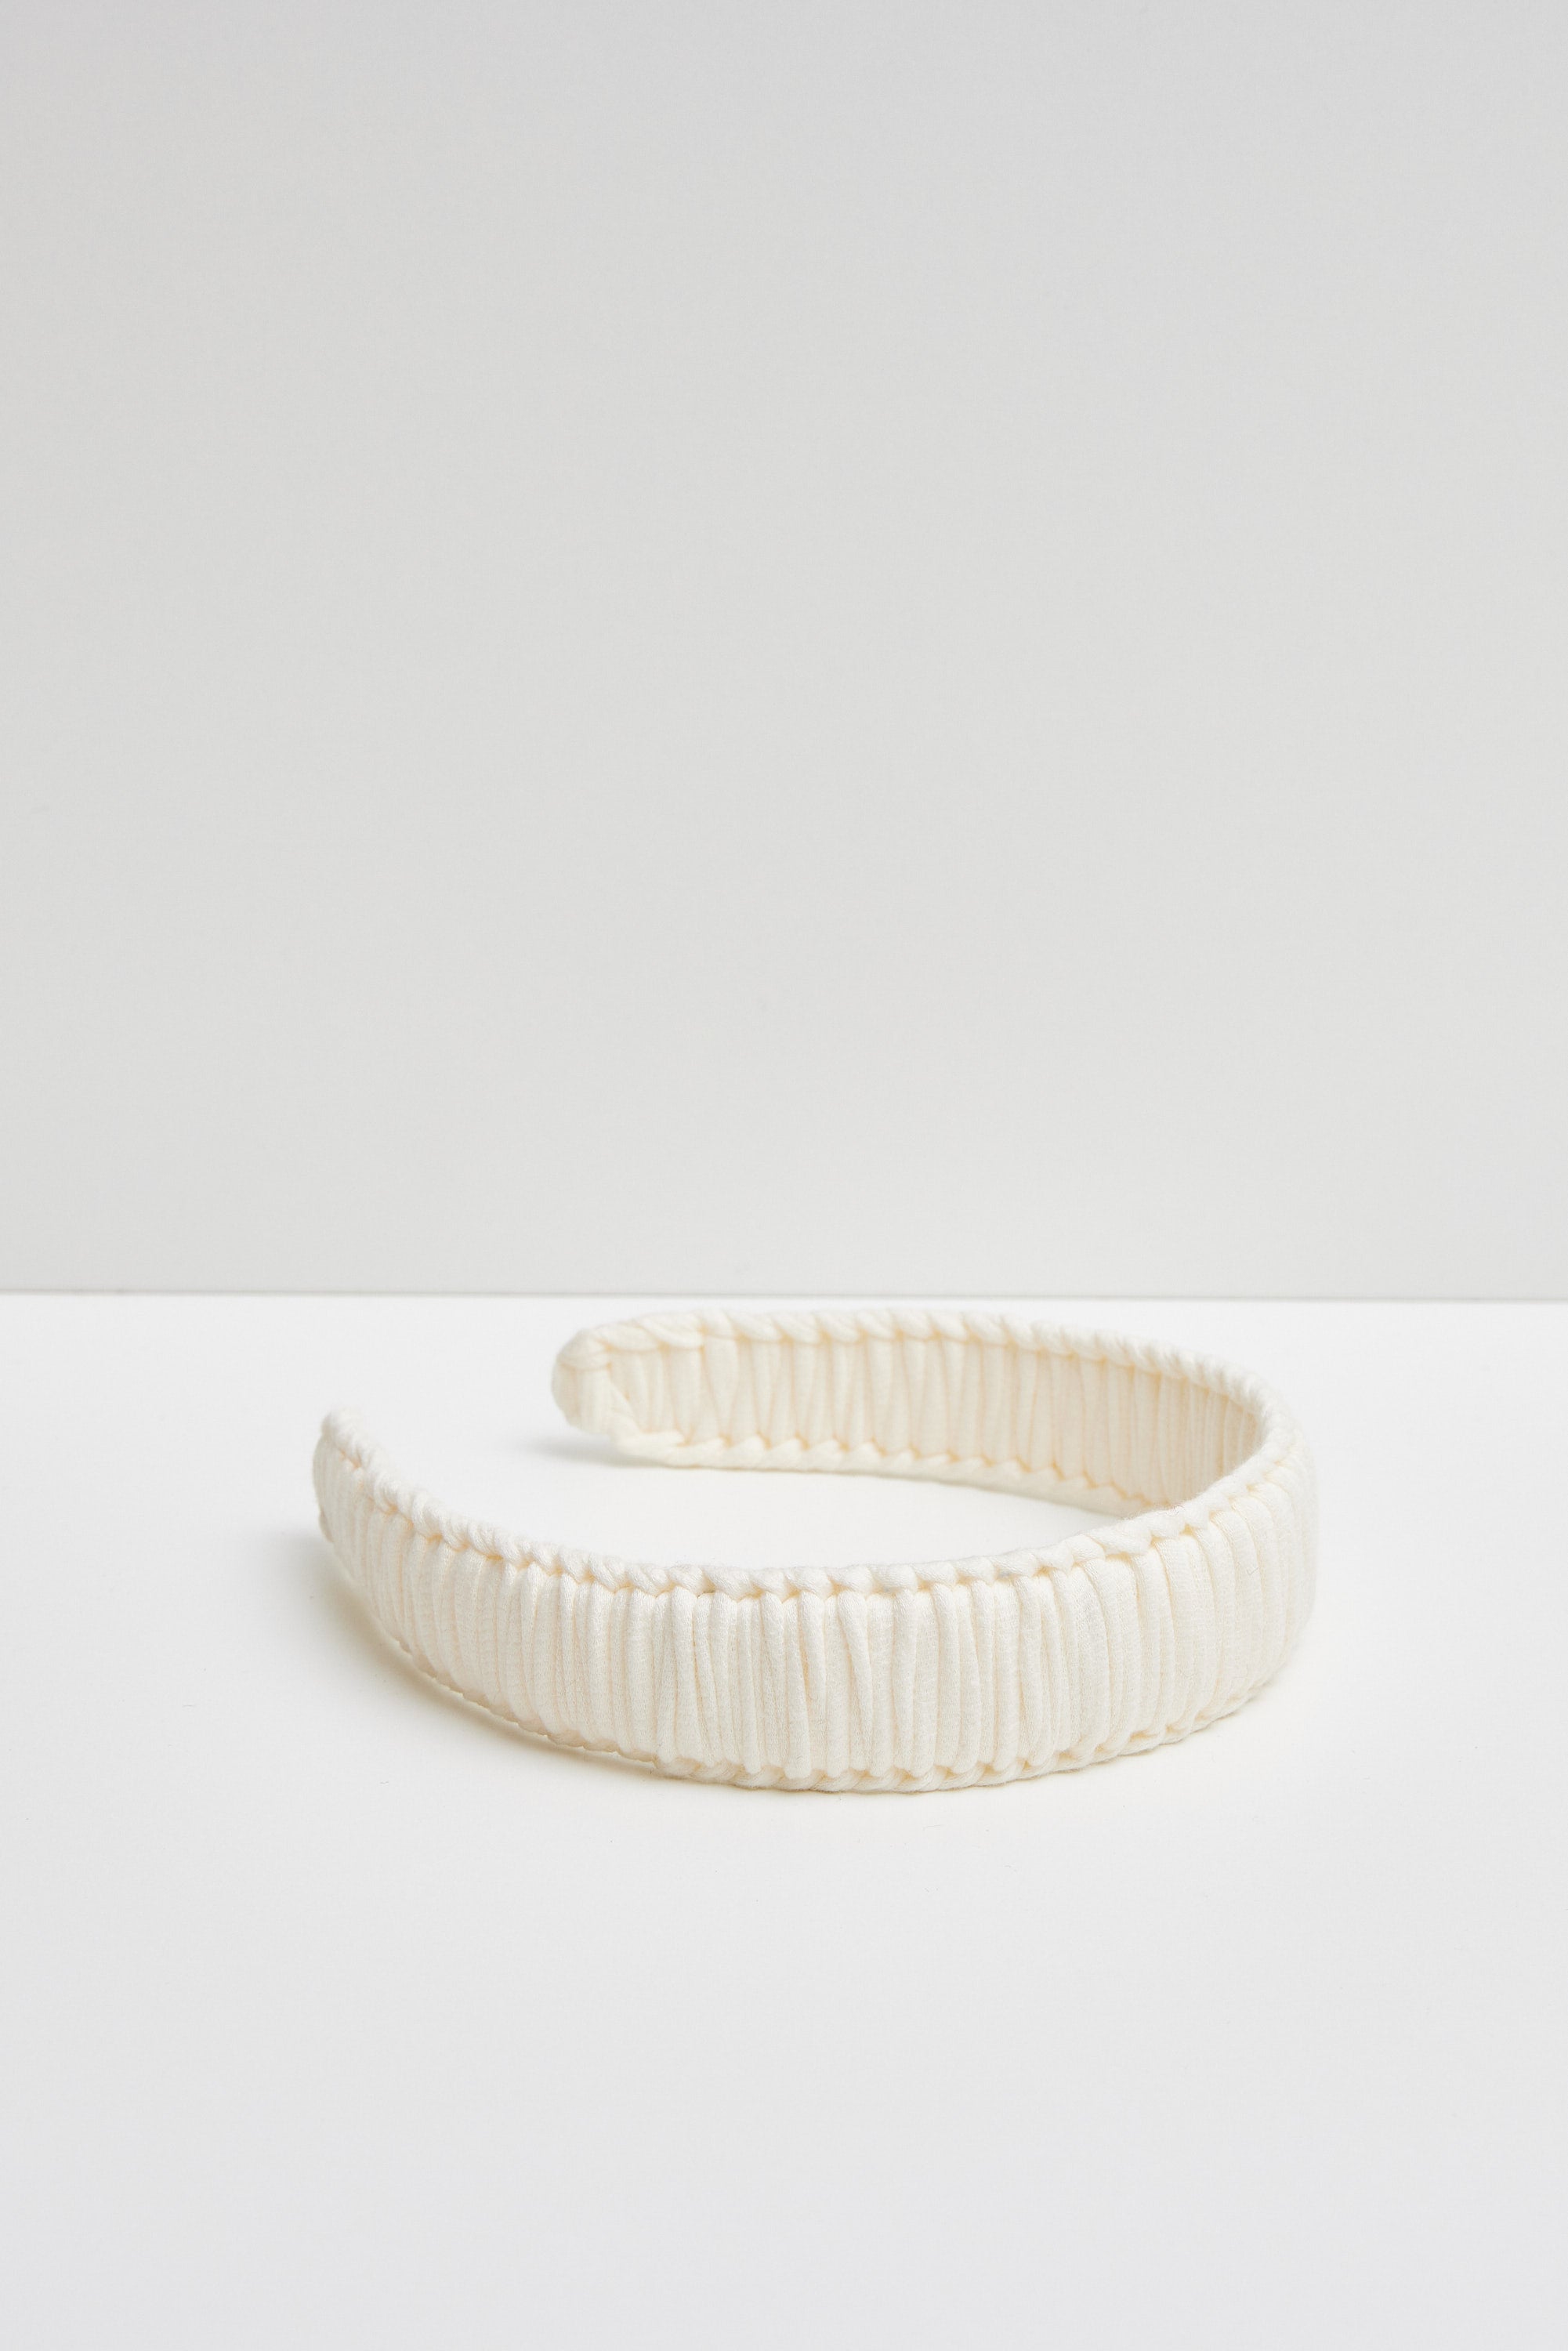 Plicare braided hairband |100% cotton | 7 colour options